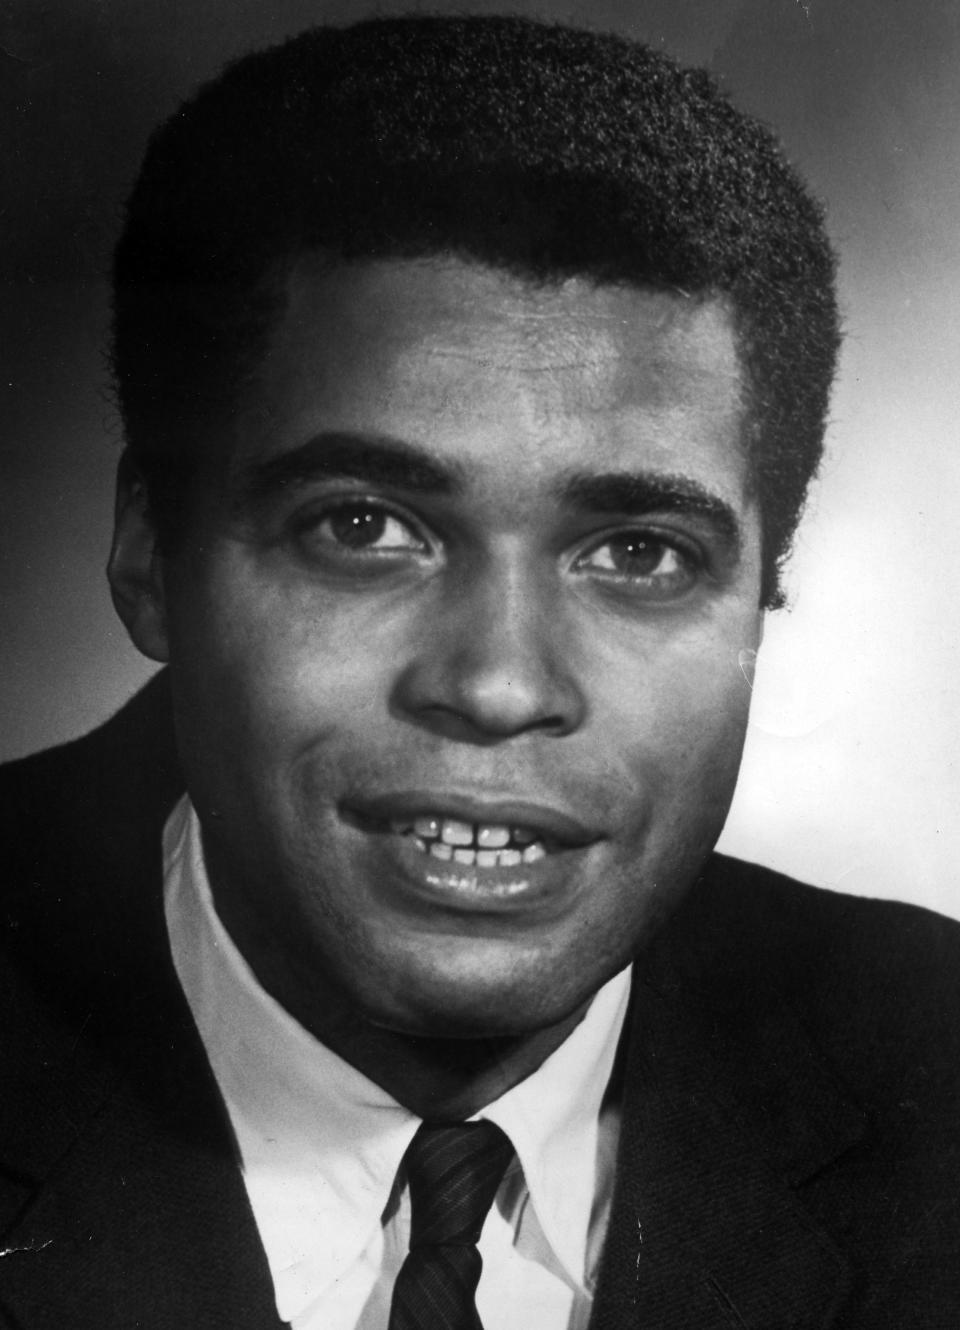 Young James Earl Jones' headshot from 1960